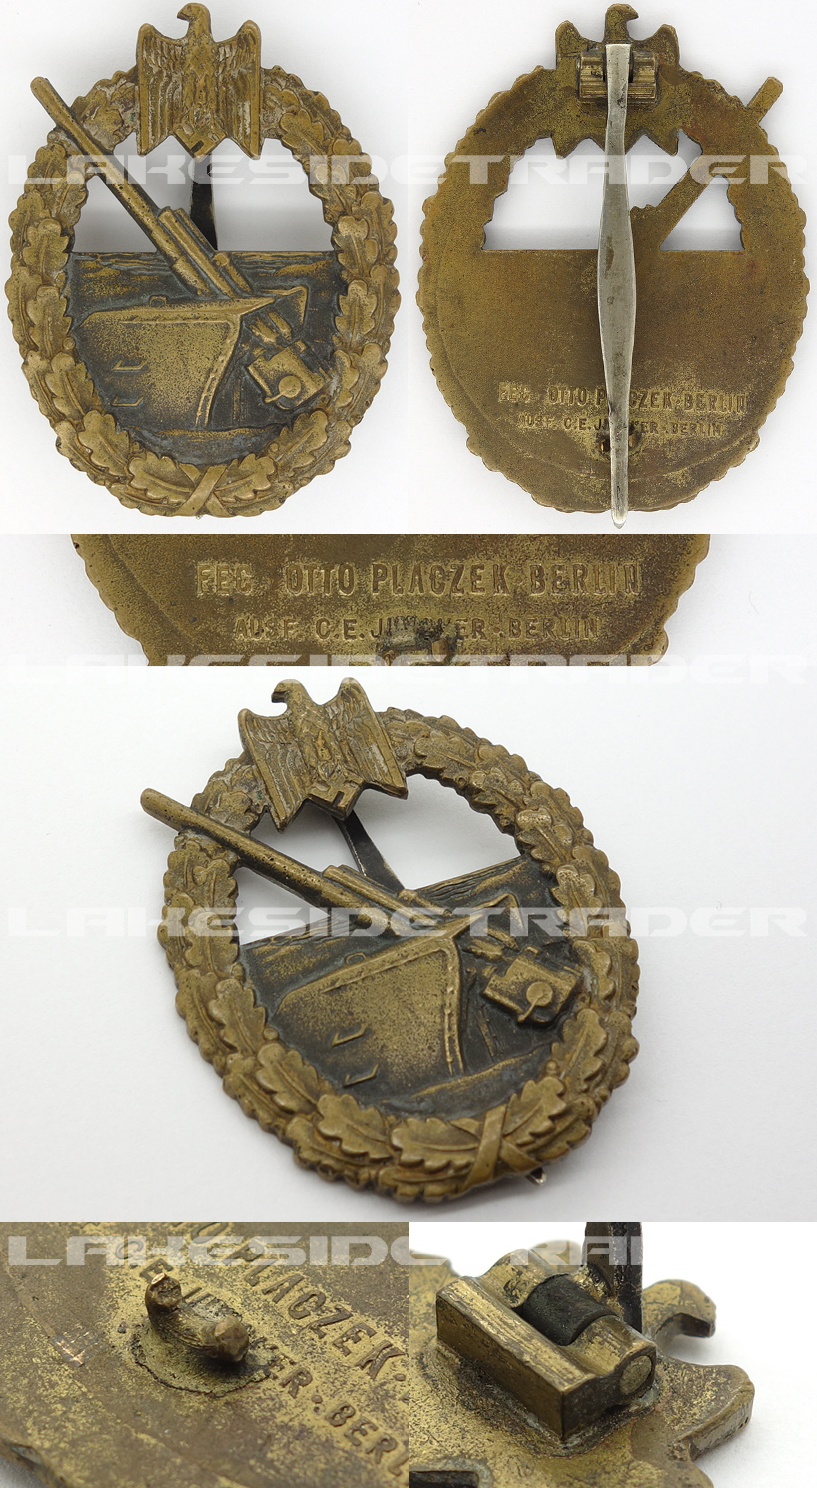 Navy Coastal Artillery Badge by C. E. Juncker